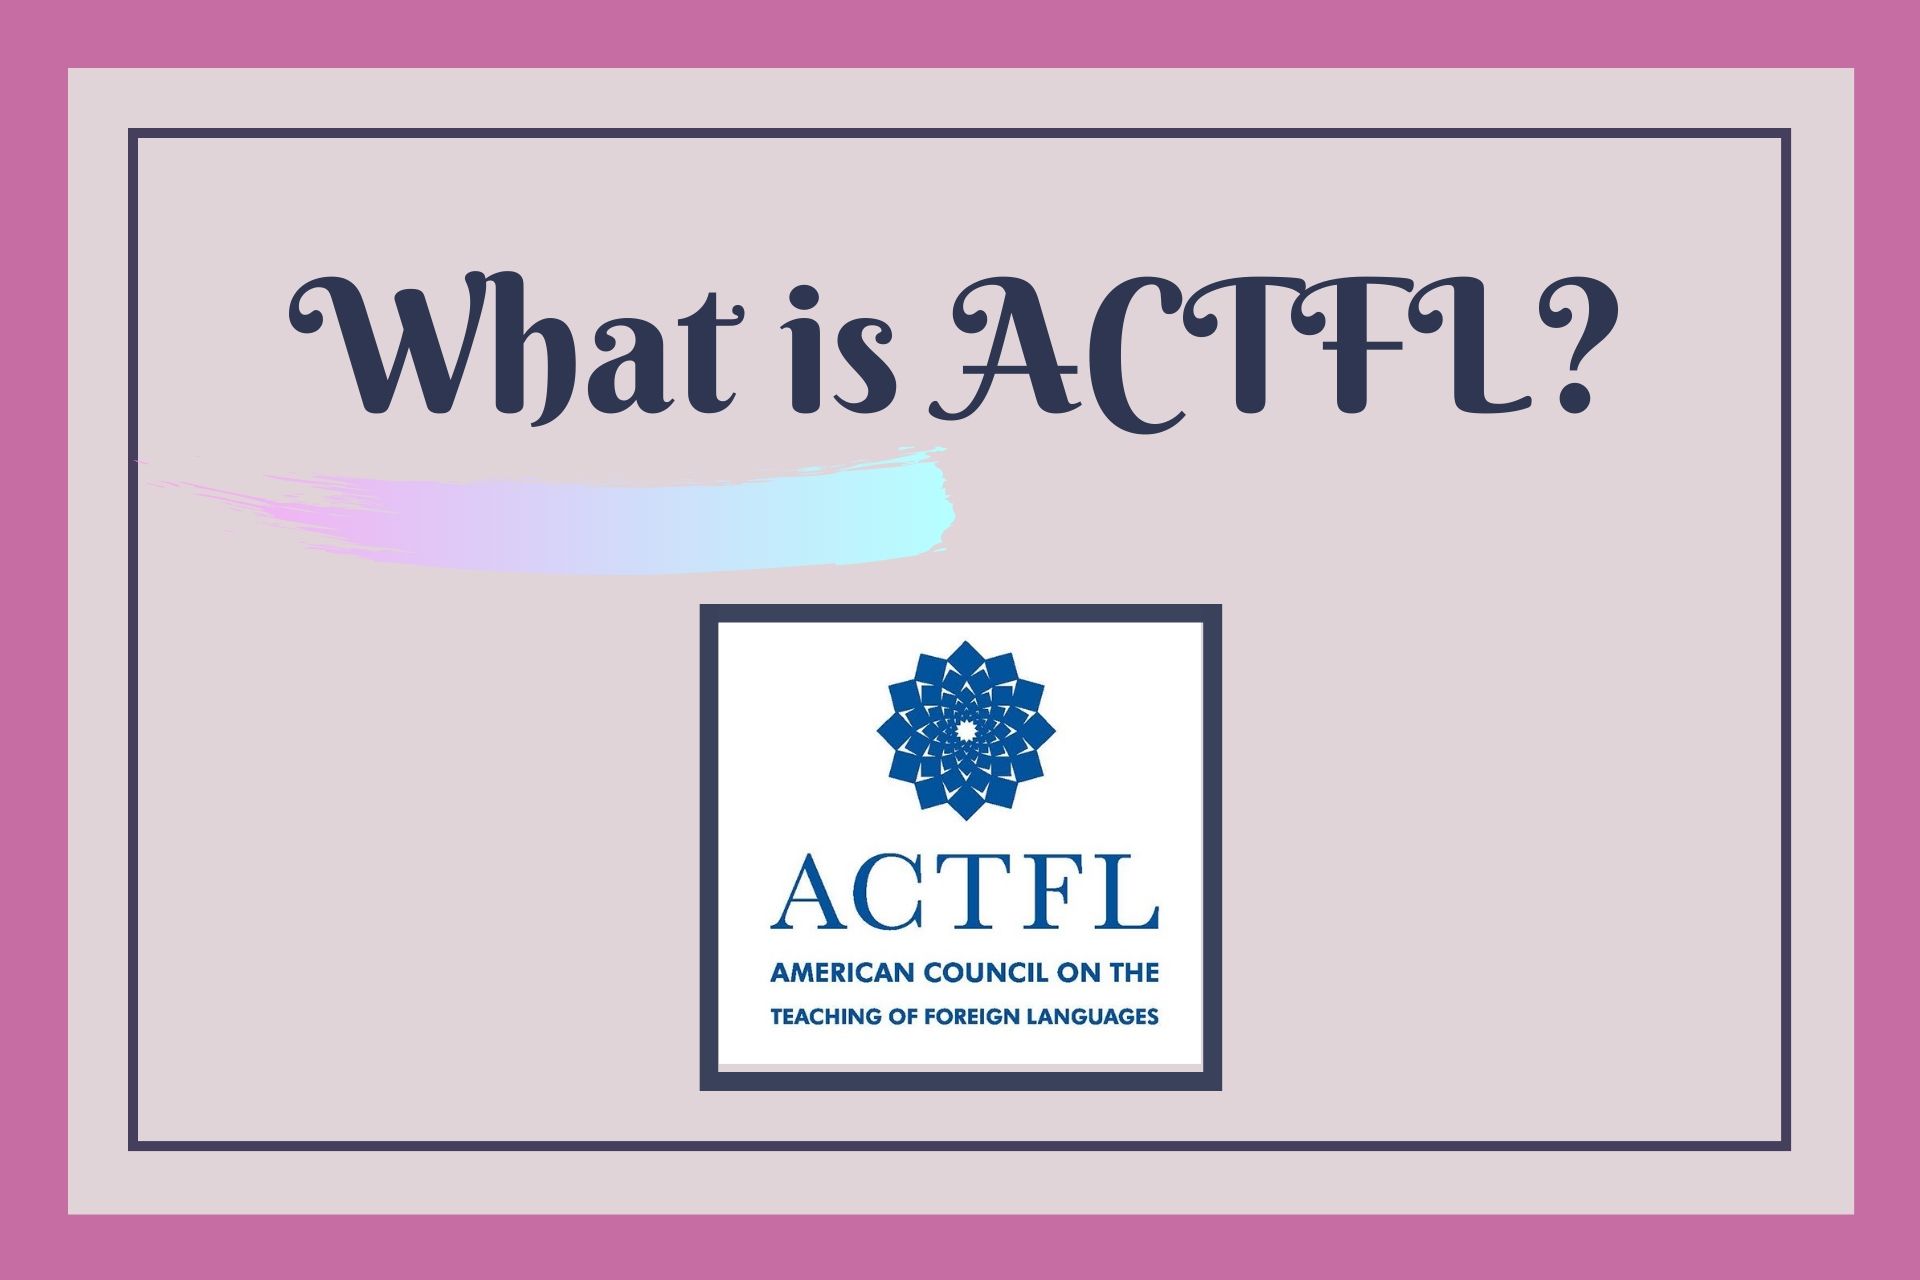 What is ACTFL?